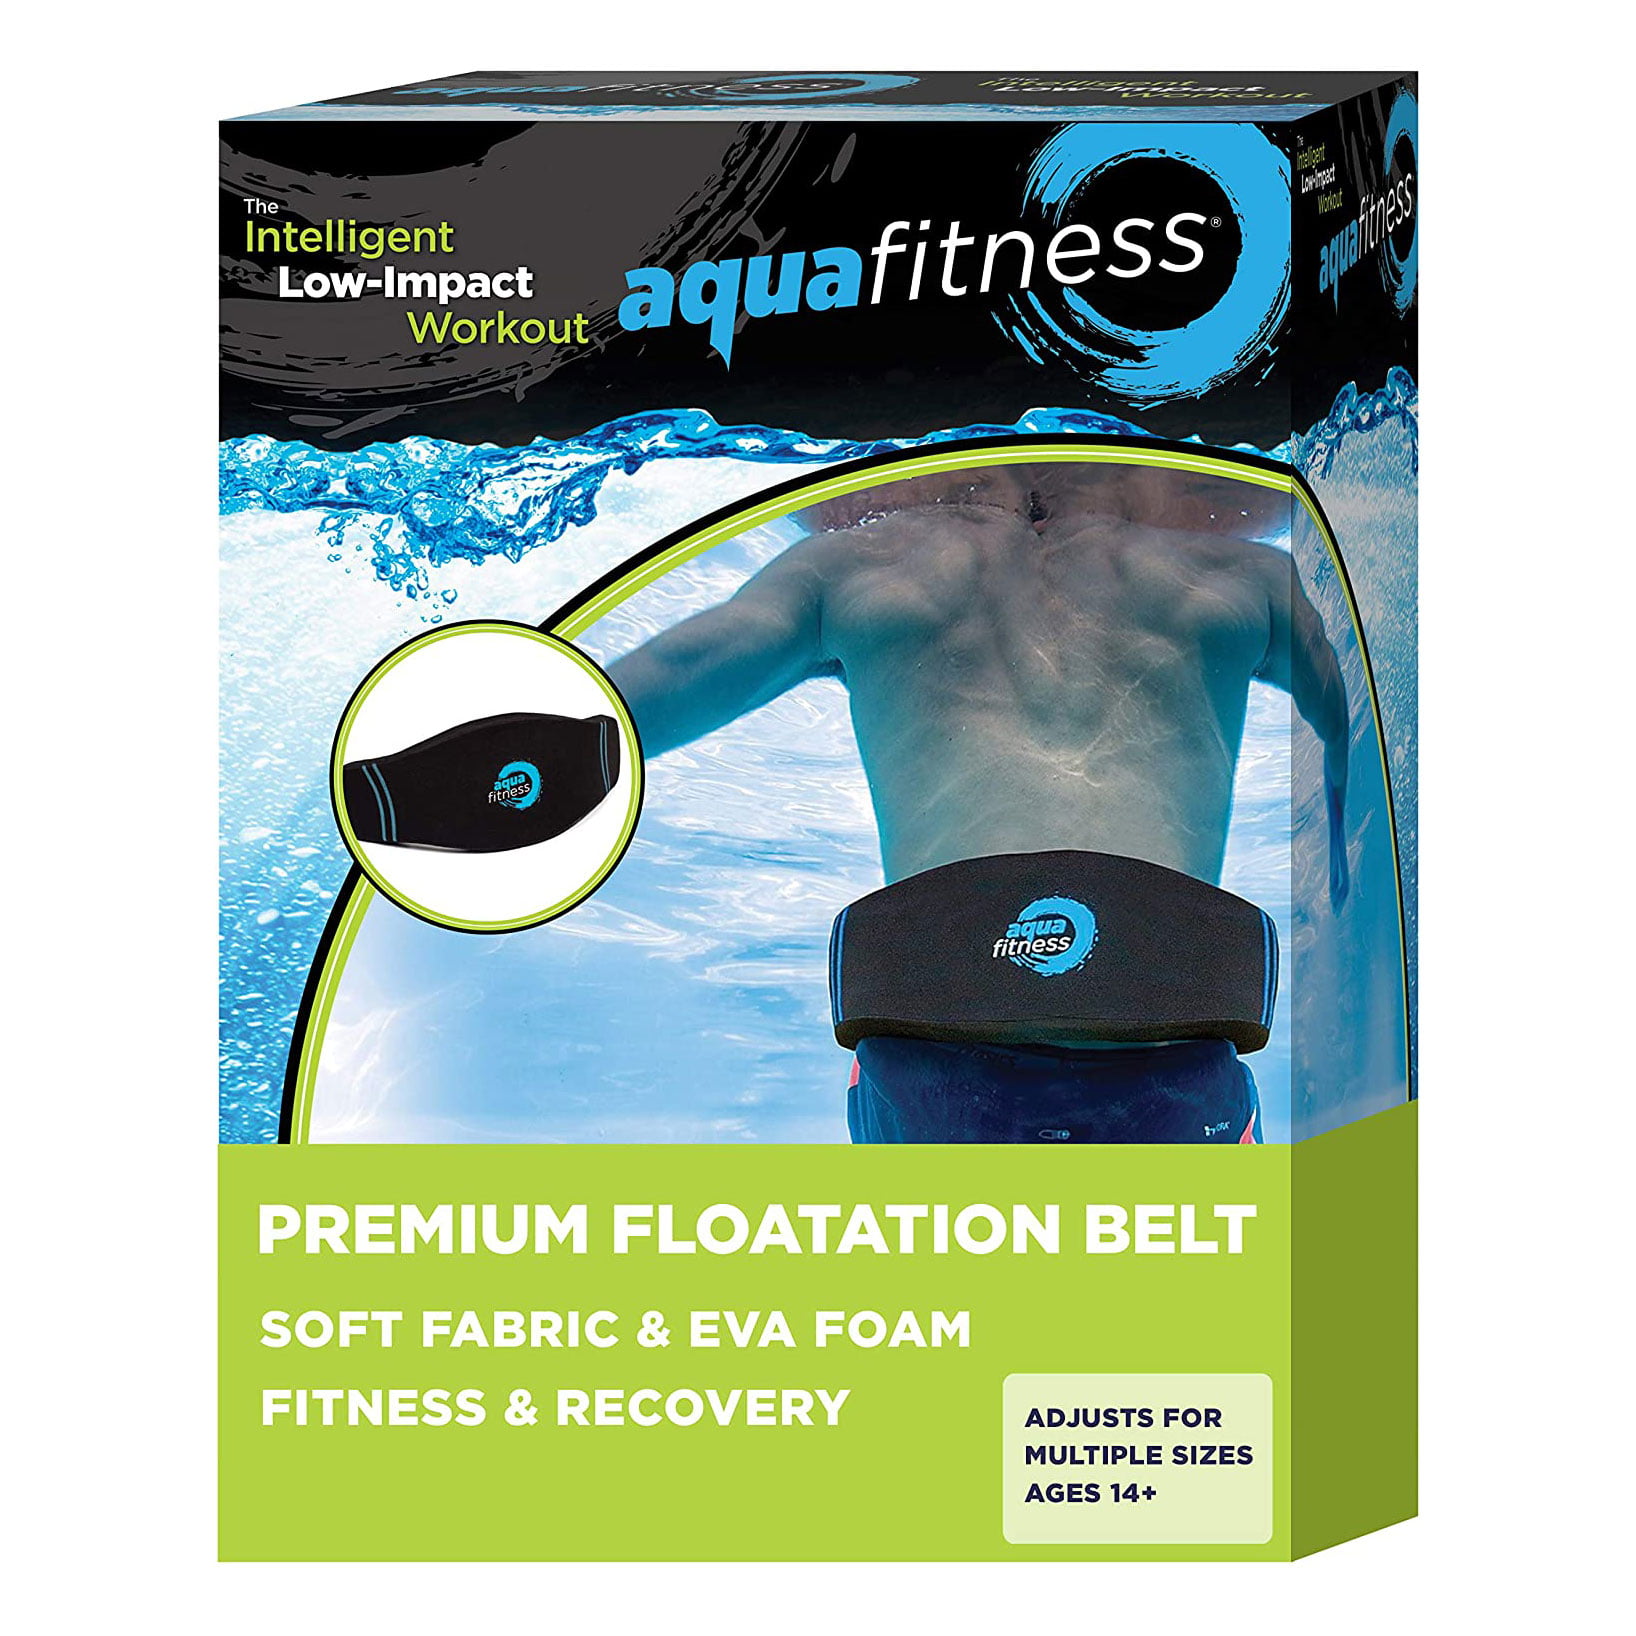 Aqua Fitness Deluxe Fitness Exercise Aerobic Resistance Training